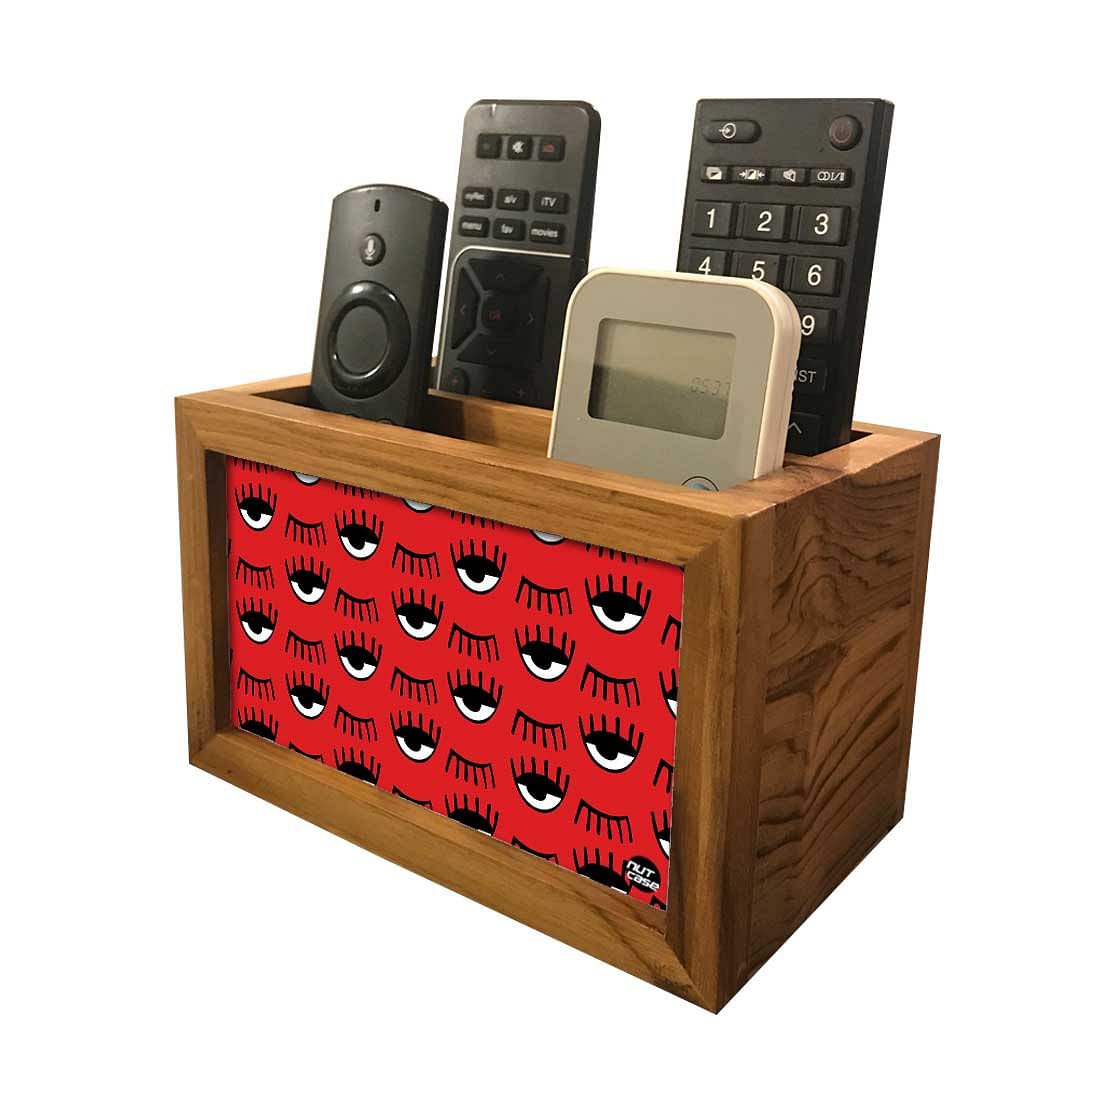 Designer Unique TV Remote Stand For TV / AC Remotes -  Eyes Nutcase